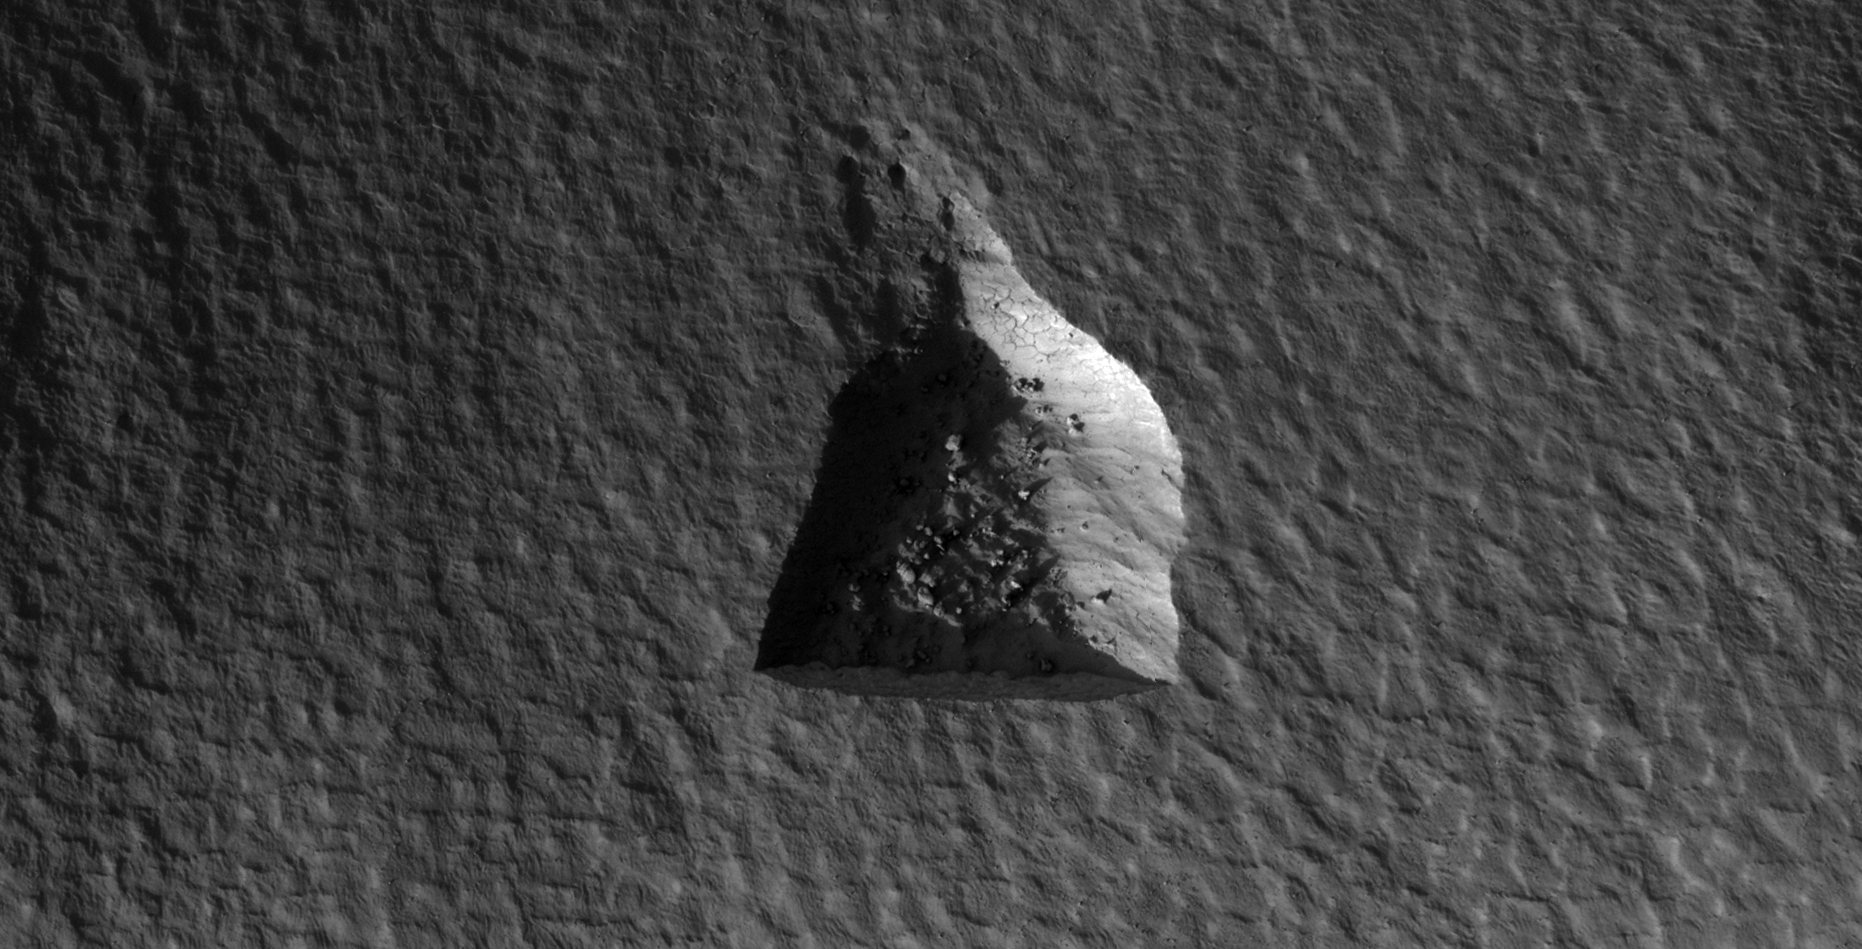 Mine or Strange Geometric Shape Carved Into Martian Surface (ESP_020286_2350)